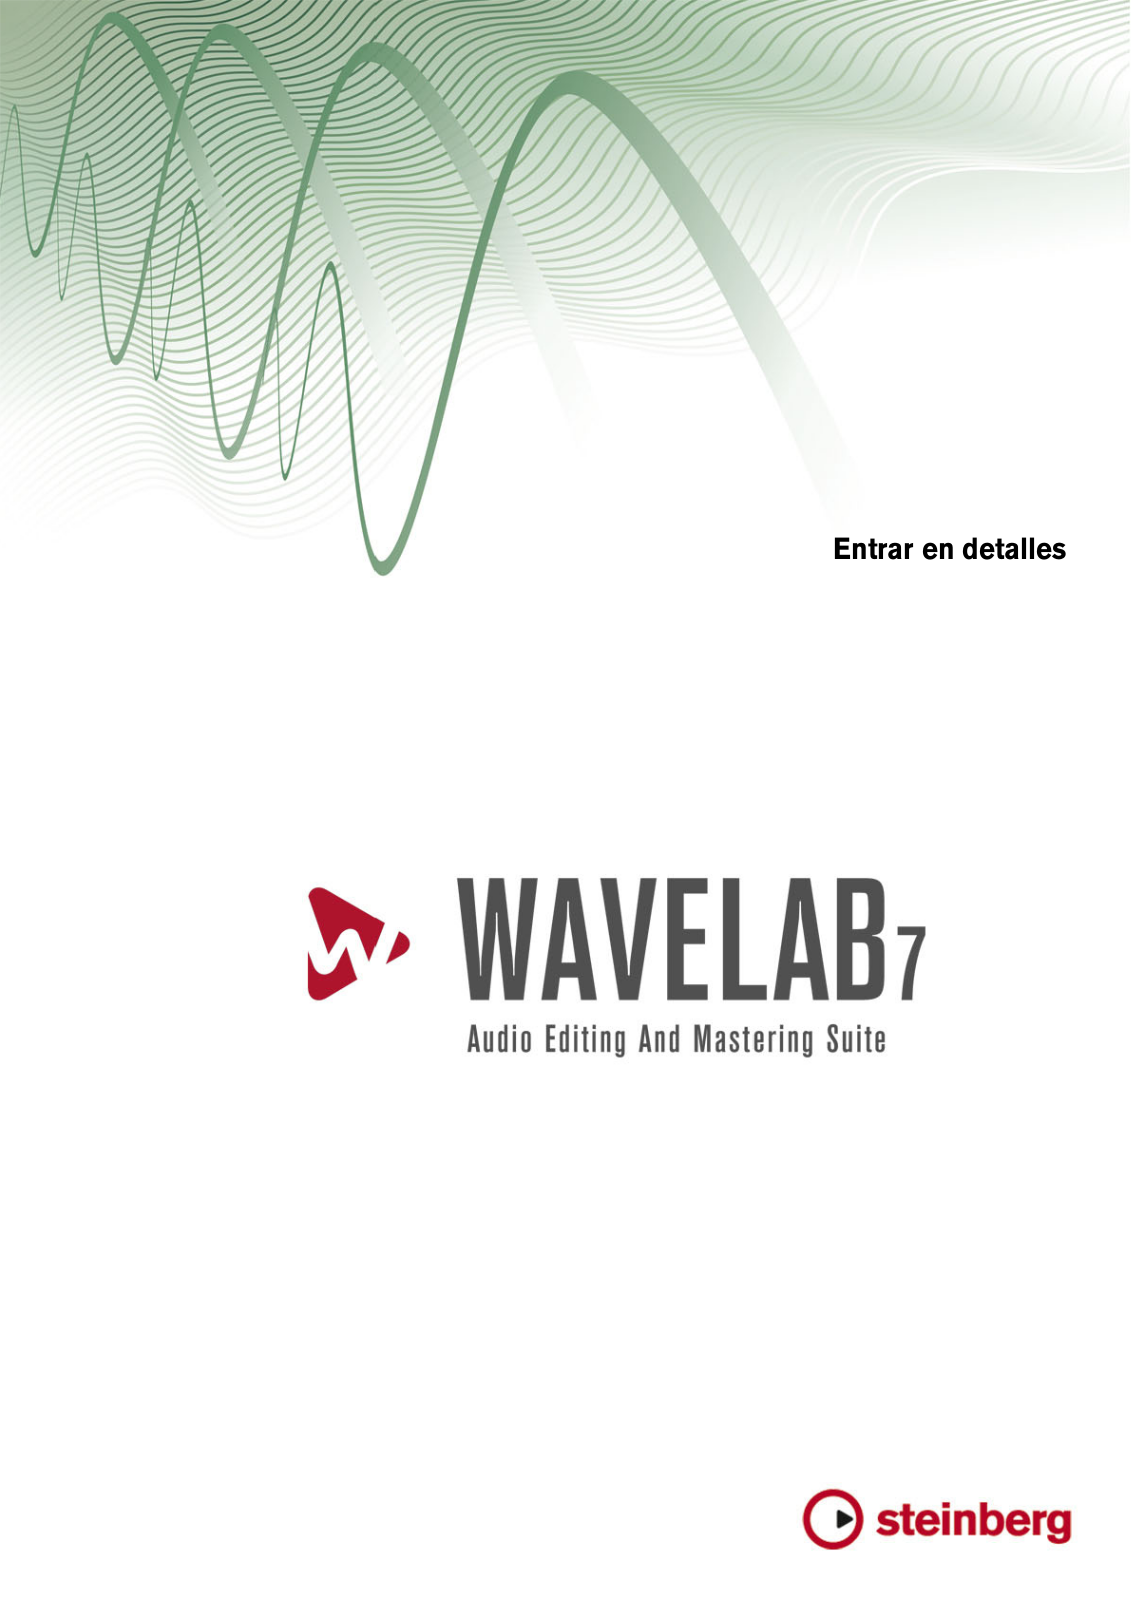 wavelab 7 edu